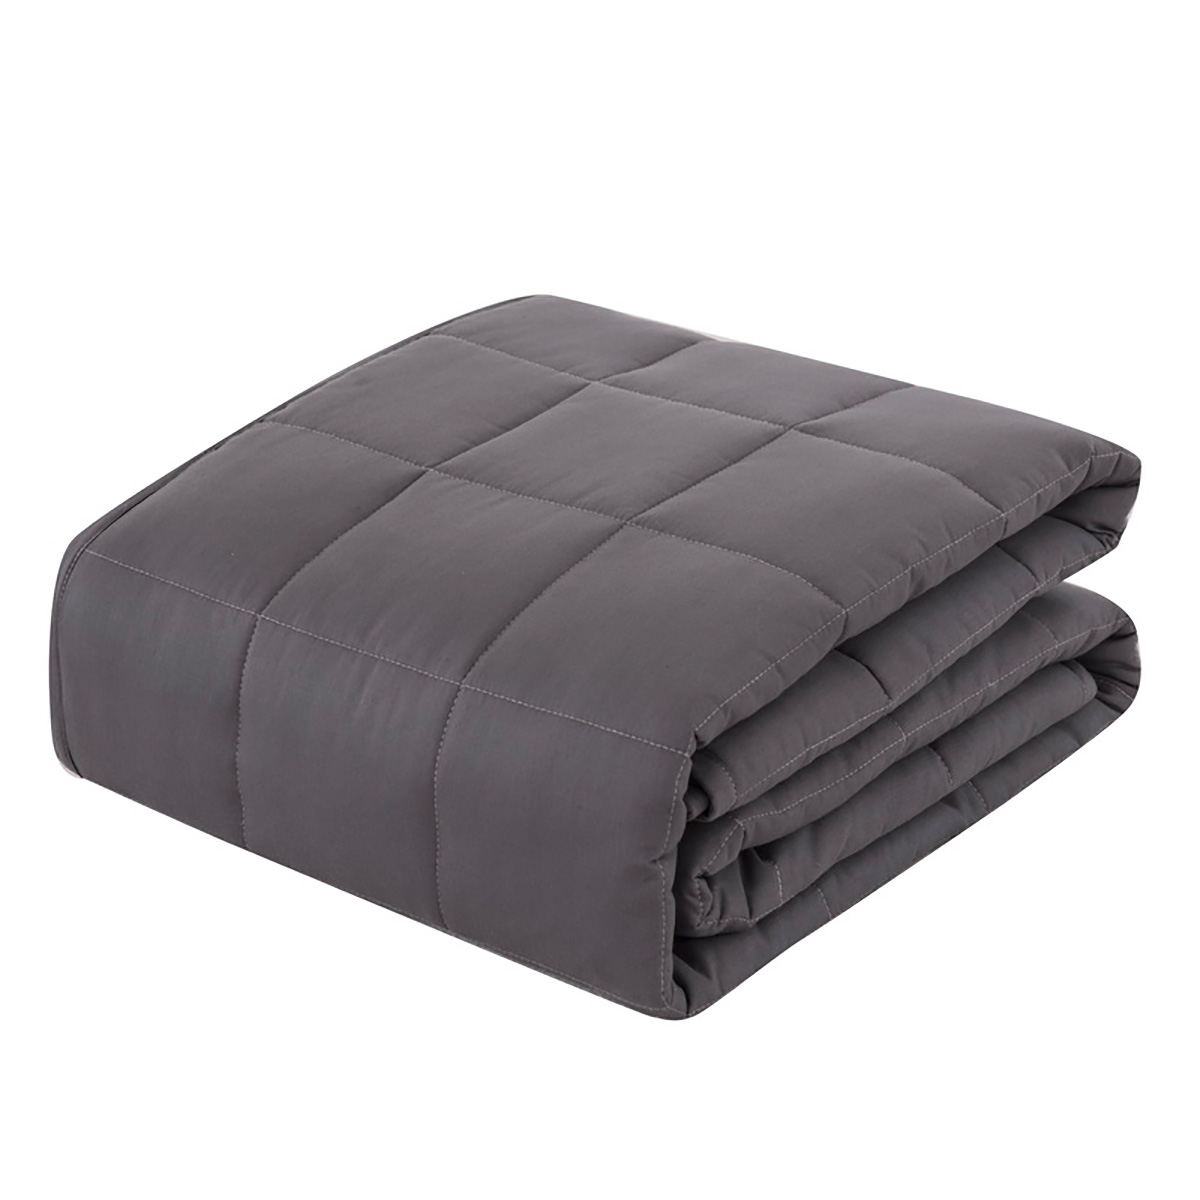 Portable Weighted Blanket For Adult Blankets Decompression Sleep Aid Pressure Sleeping Heavy Winter Blanket Dark Grey Cotton